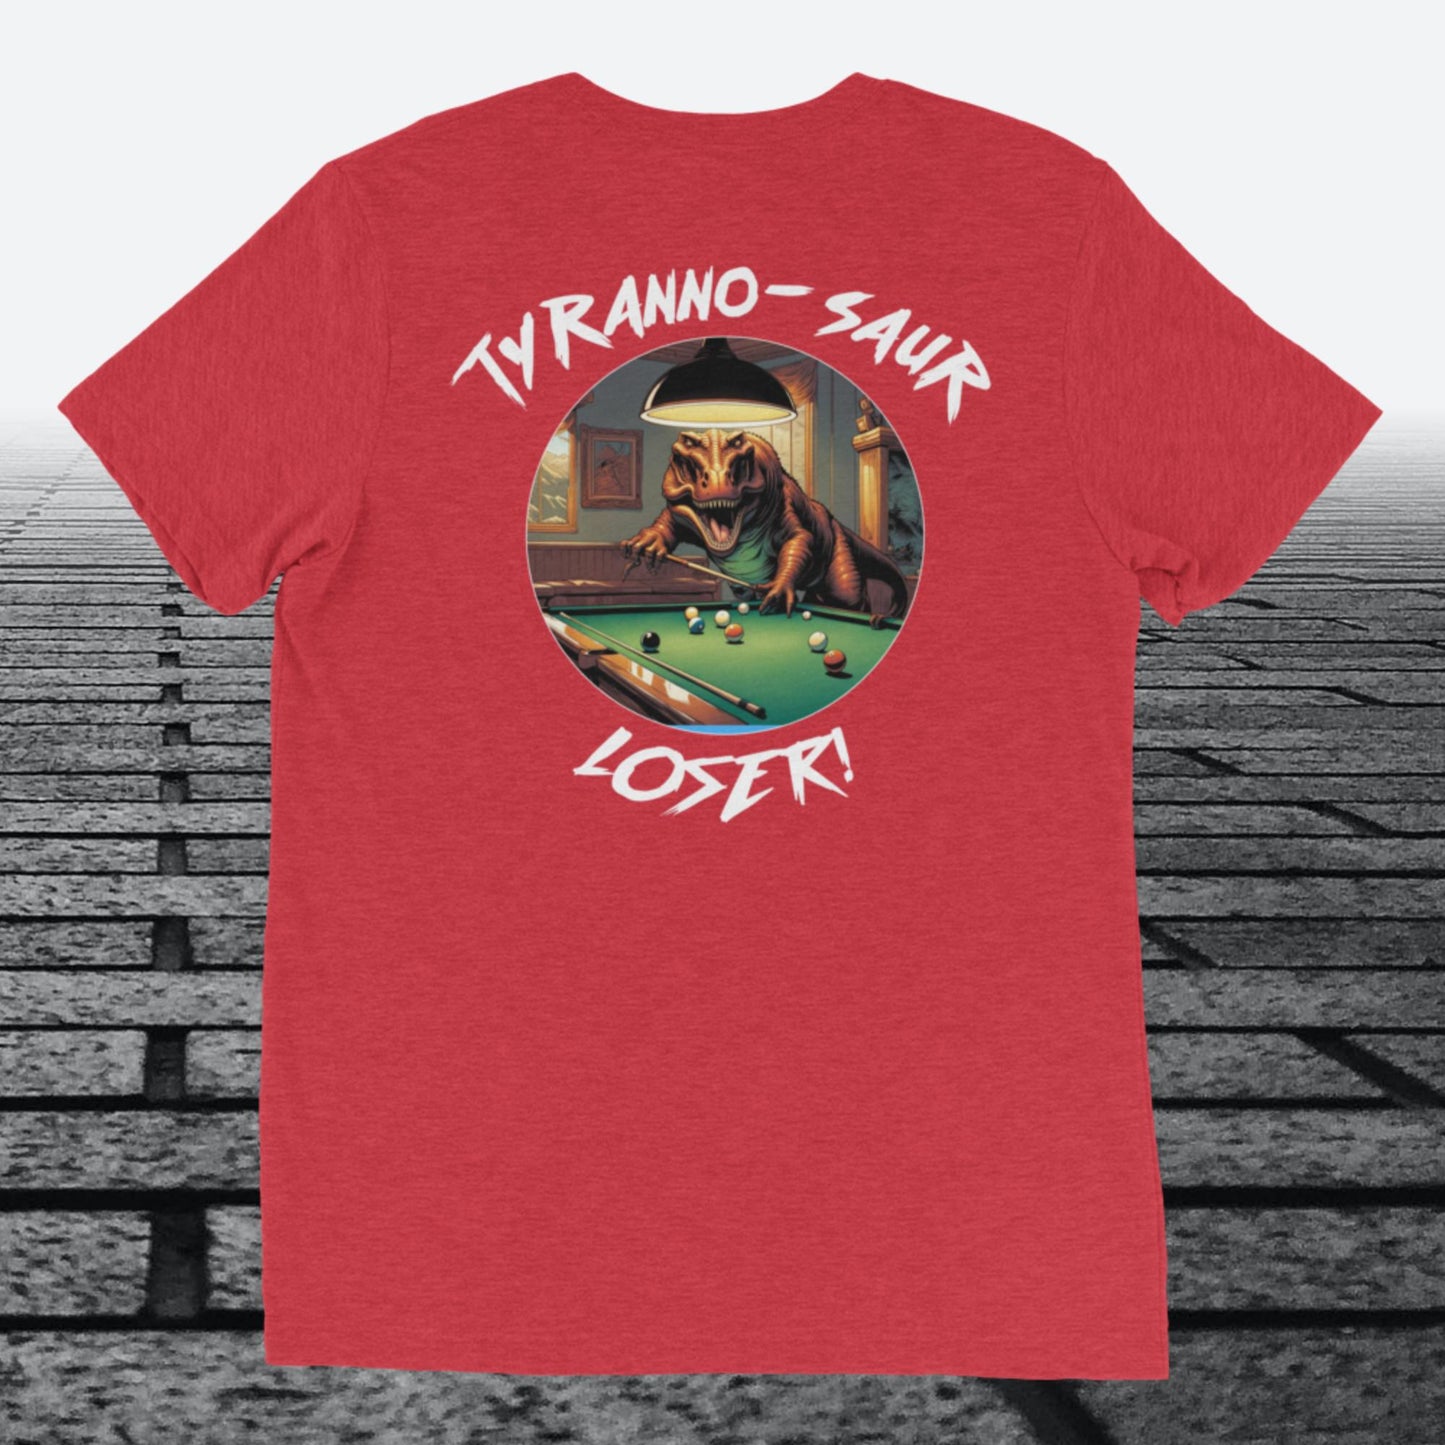 Tyranno-Saur Loser, on the back, Tri-blend t-shirt